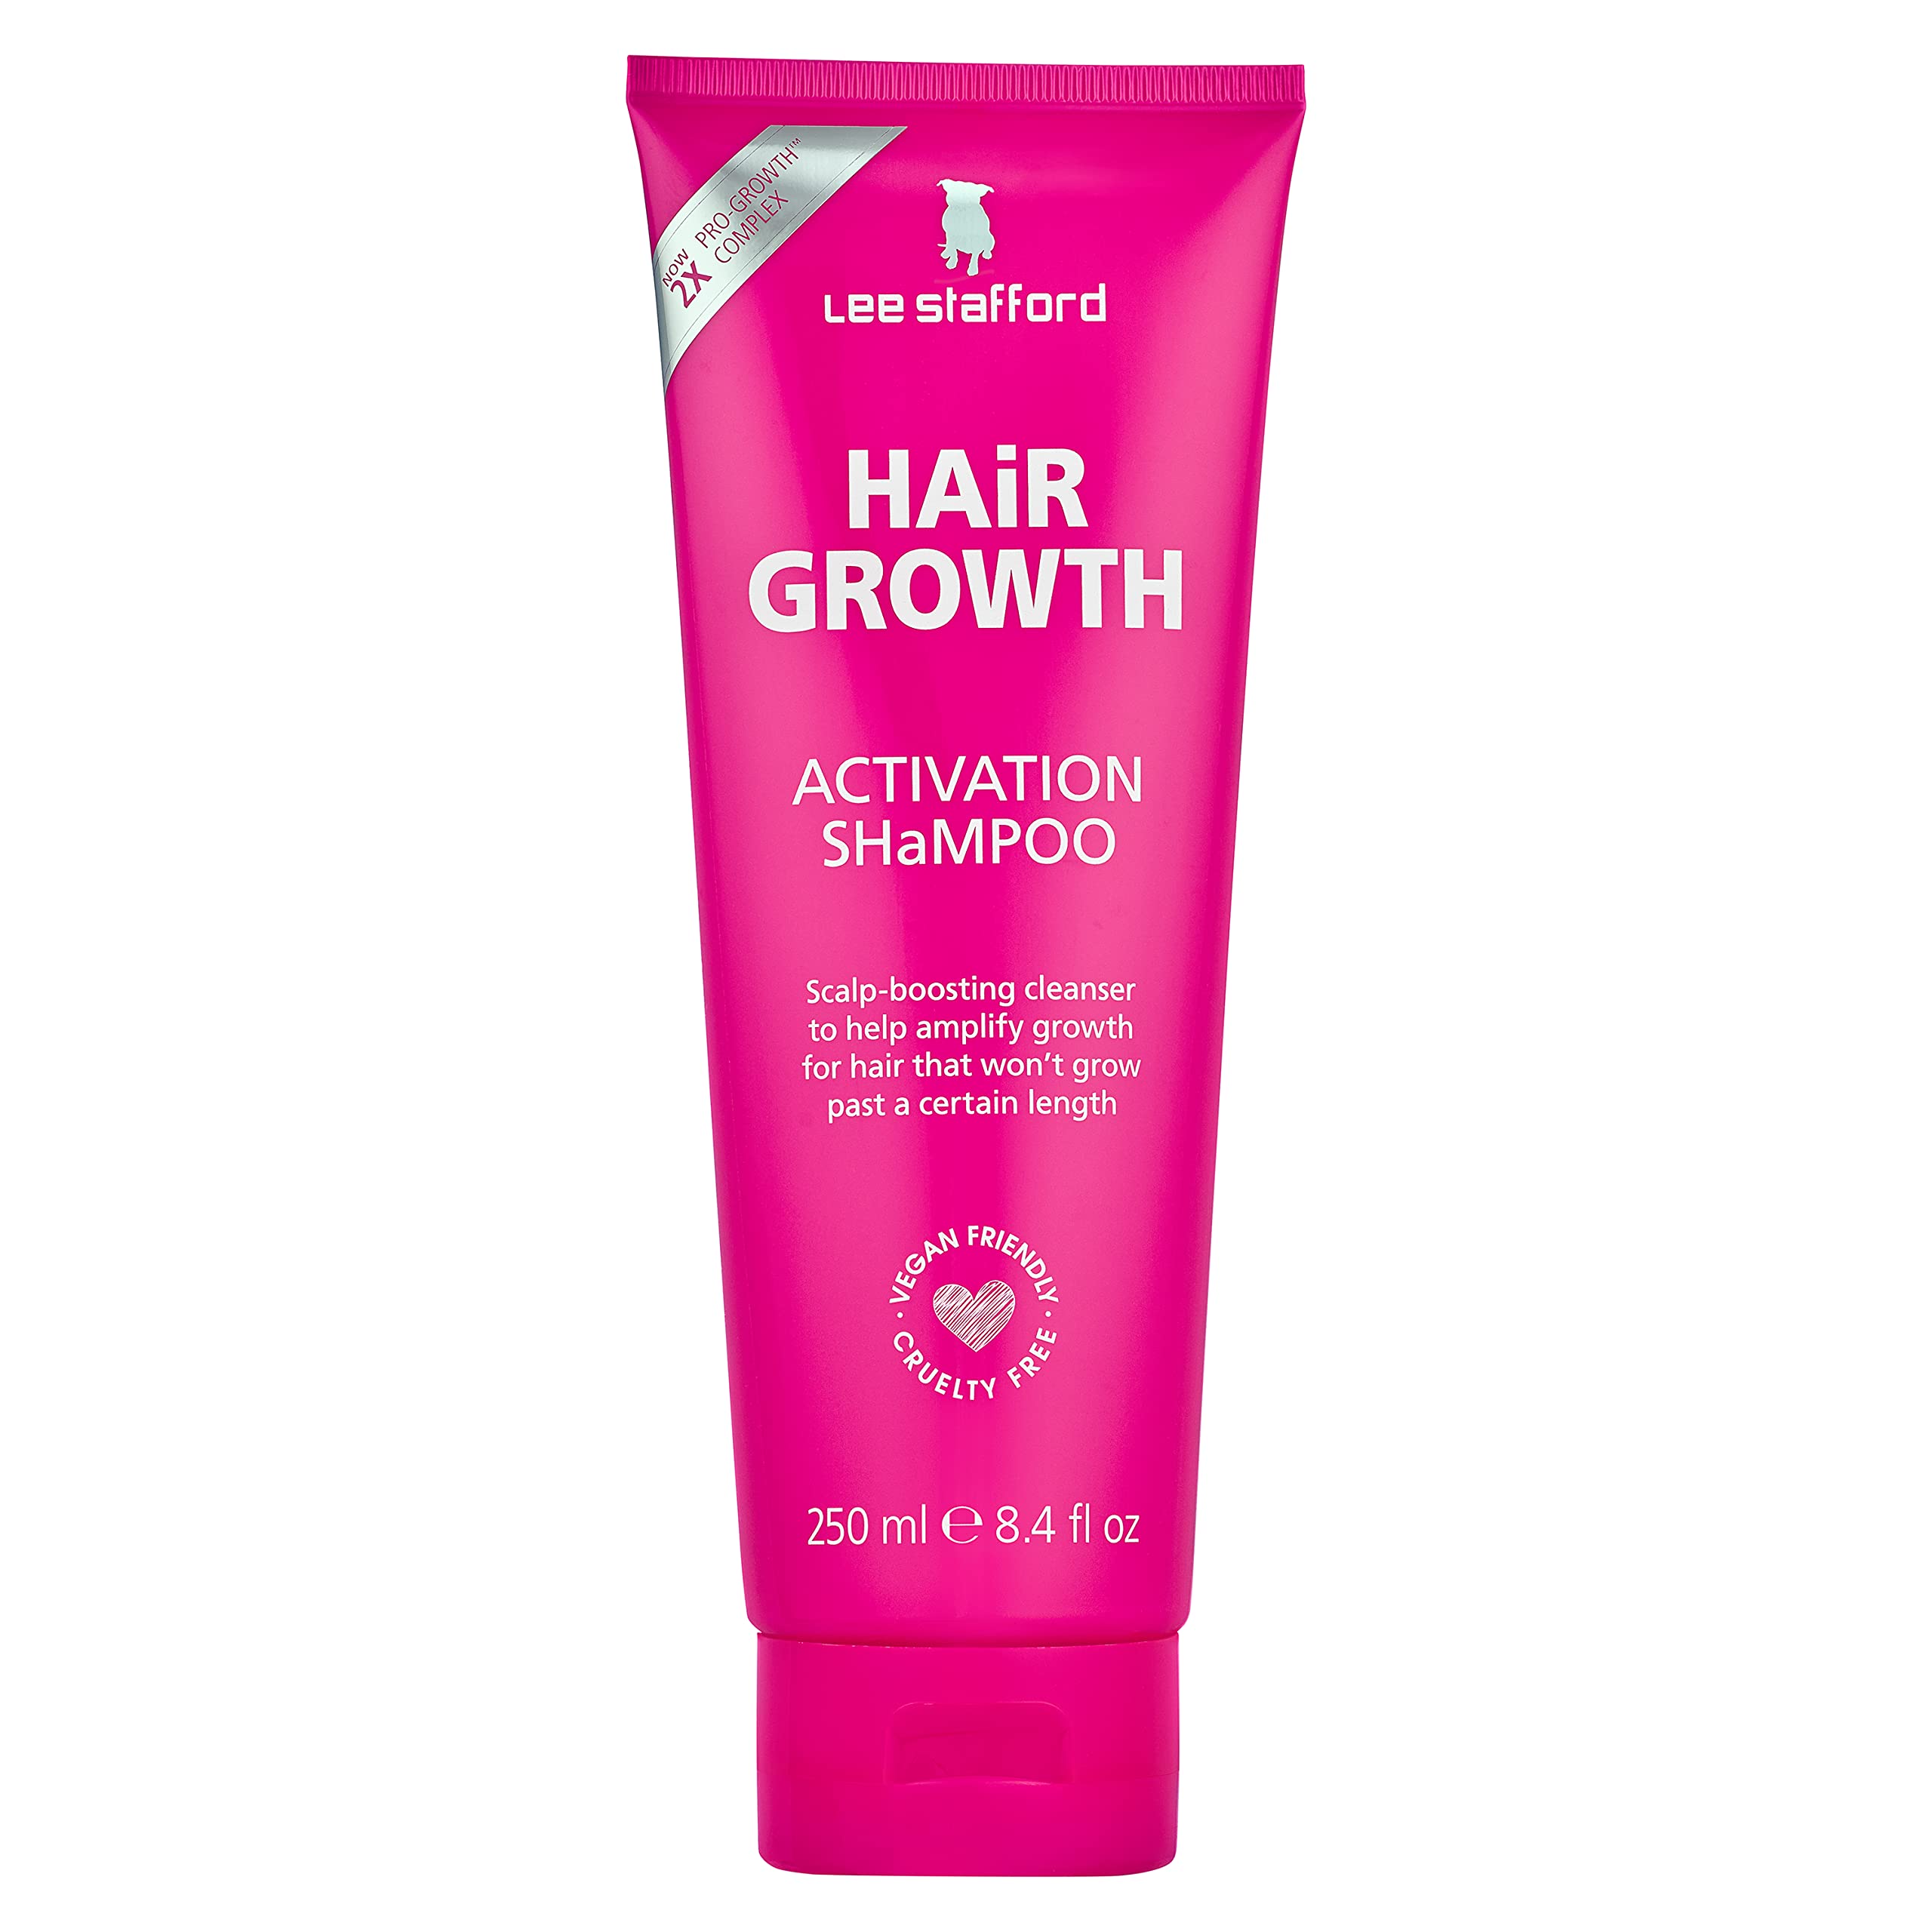 Lee Stafford Vegan Friendly Hair Growth Shampoo - 200ml | Hair Growth Treatment Containing PRO -GROWTH Complex to Encourage Hair Growth | Hair Products, Hair Loss Treatment for Women, 326411